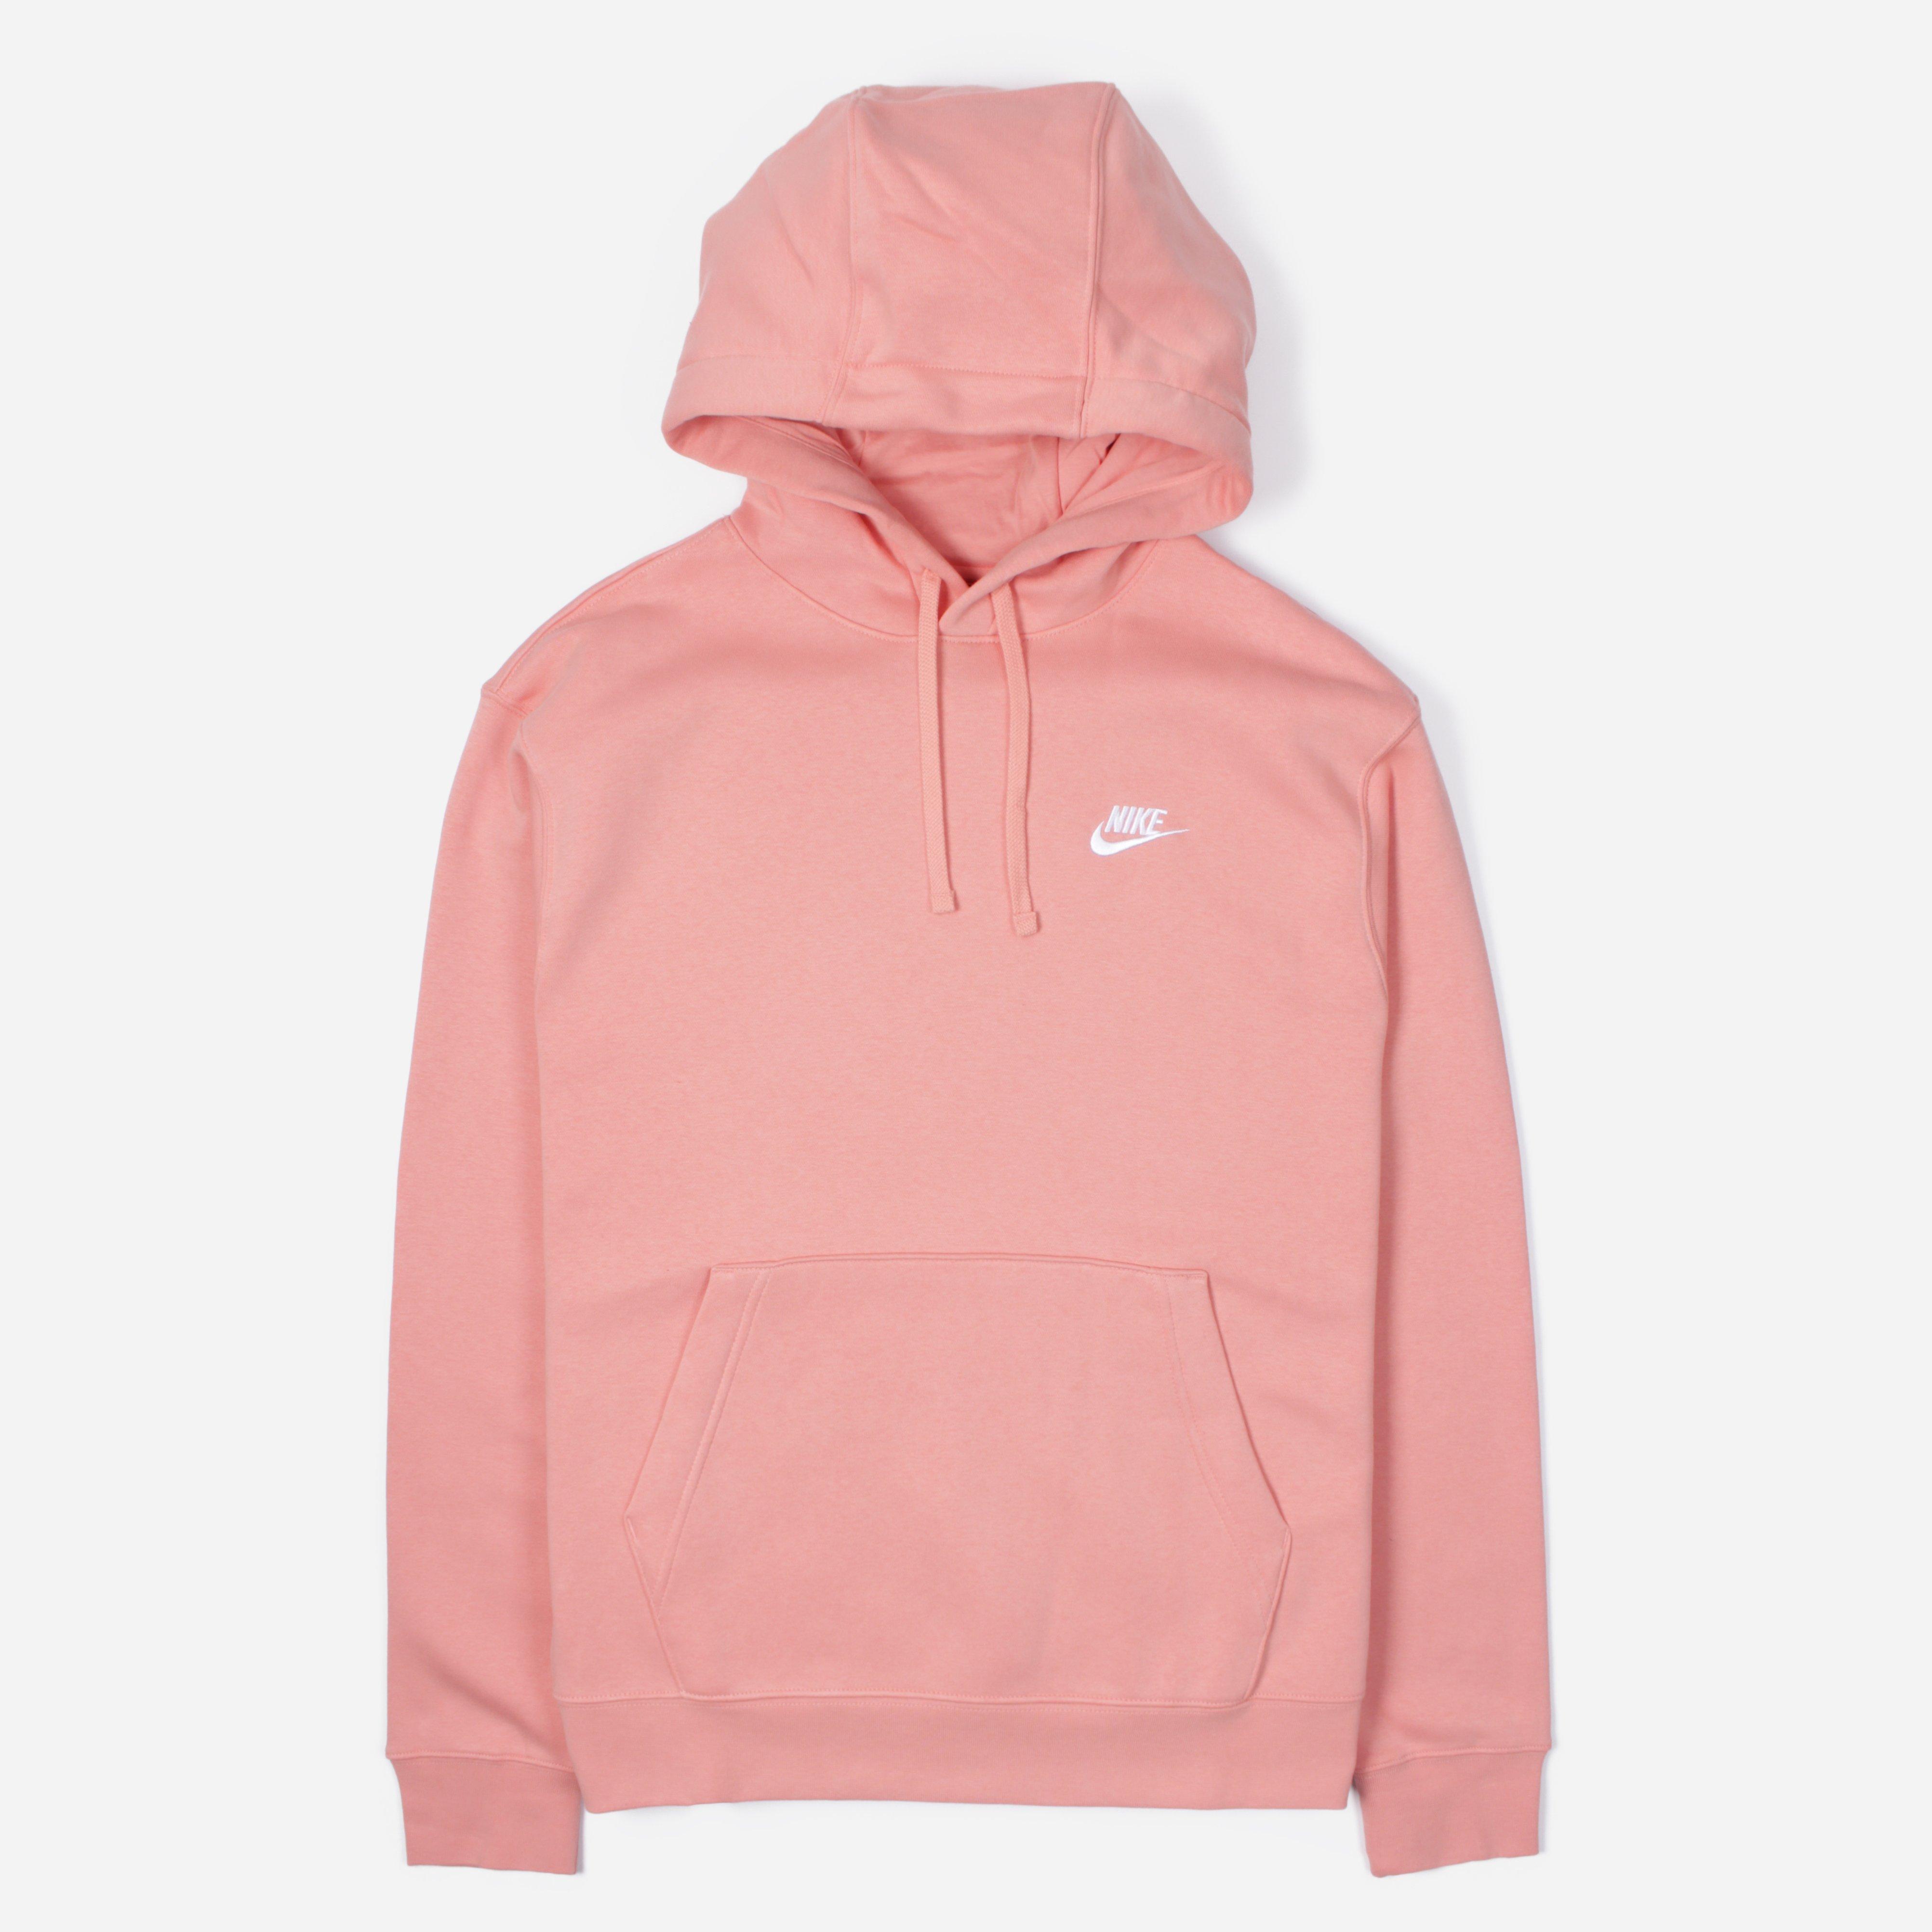 nike foundation overhead hoodie pink